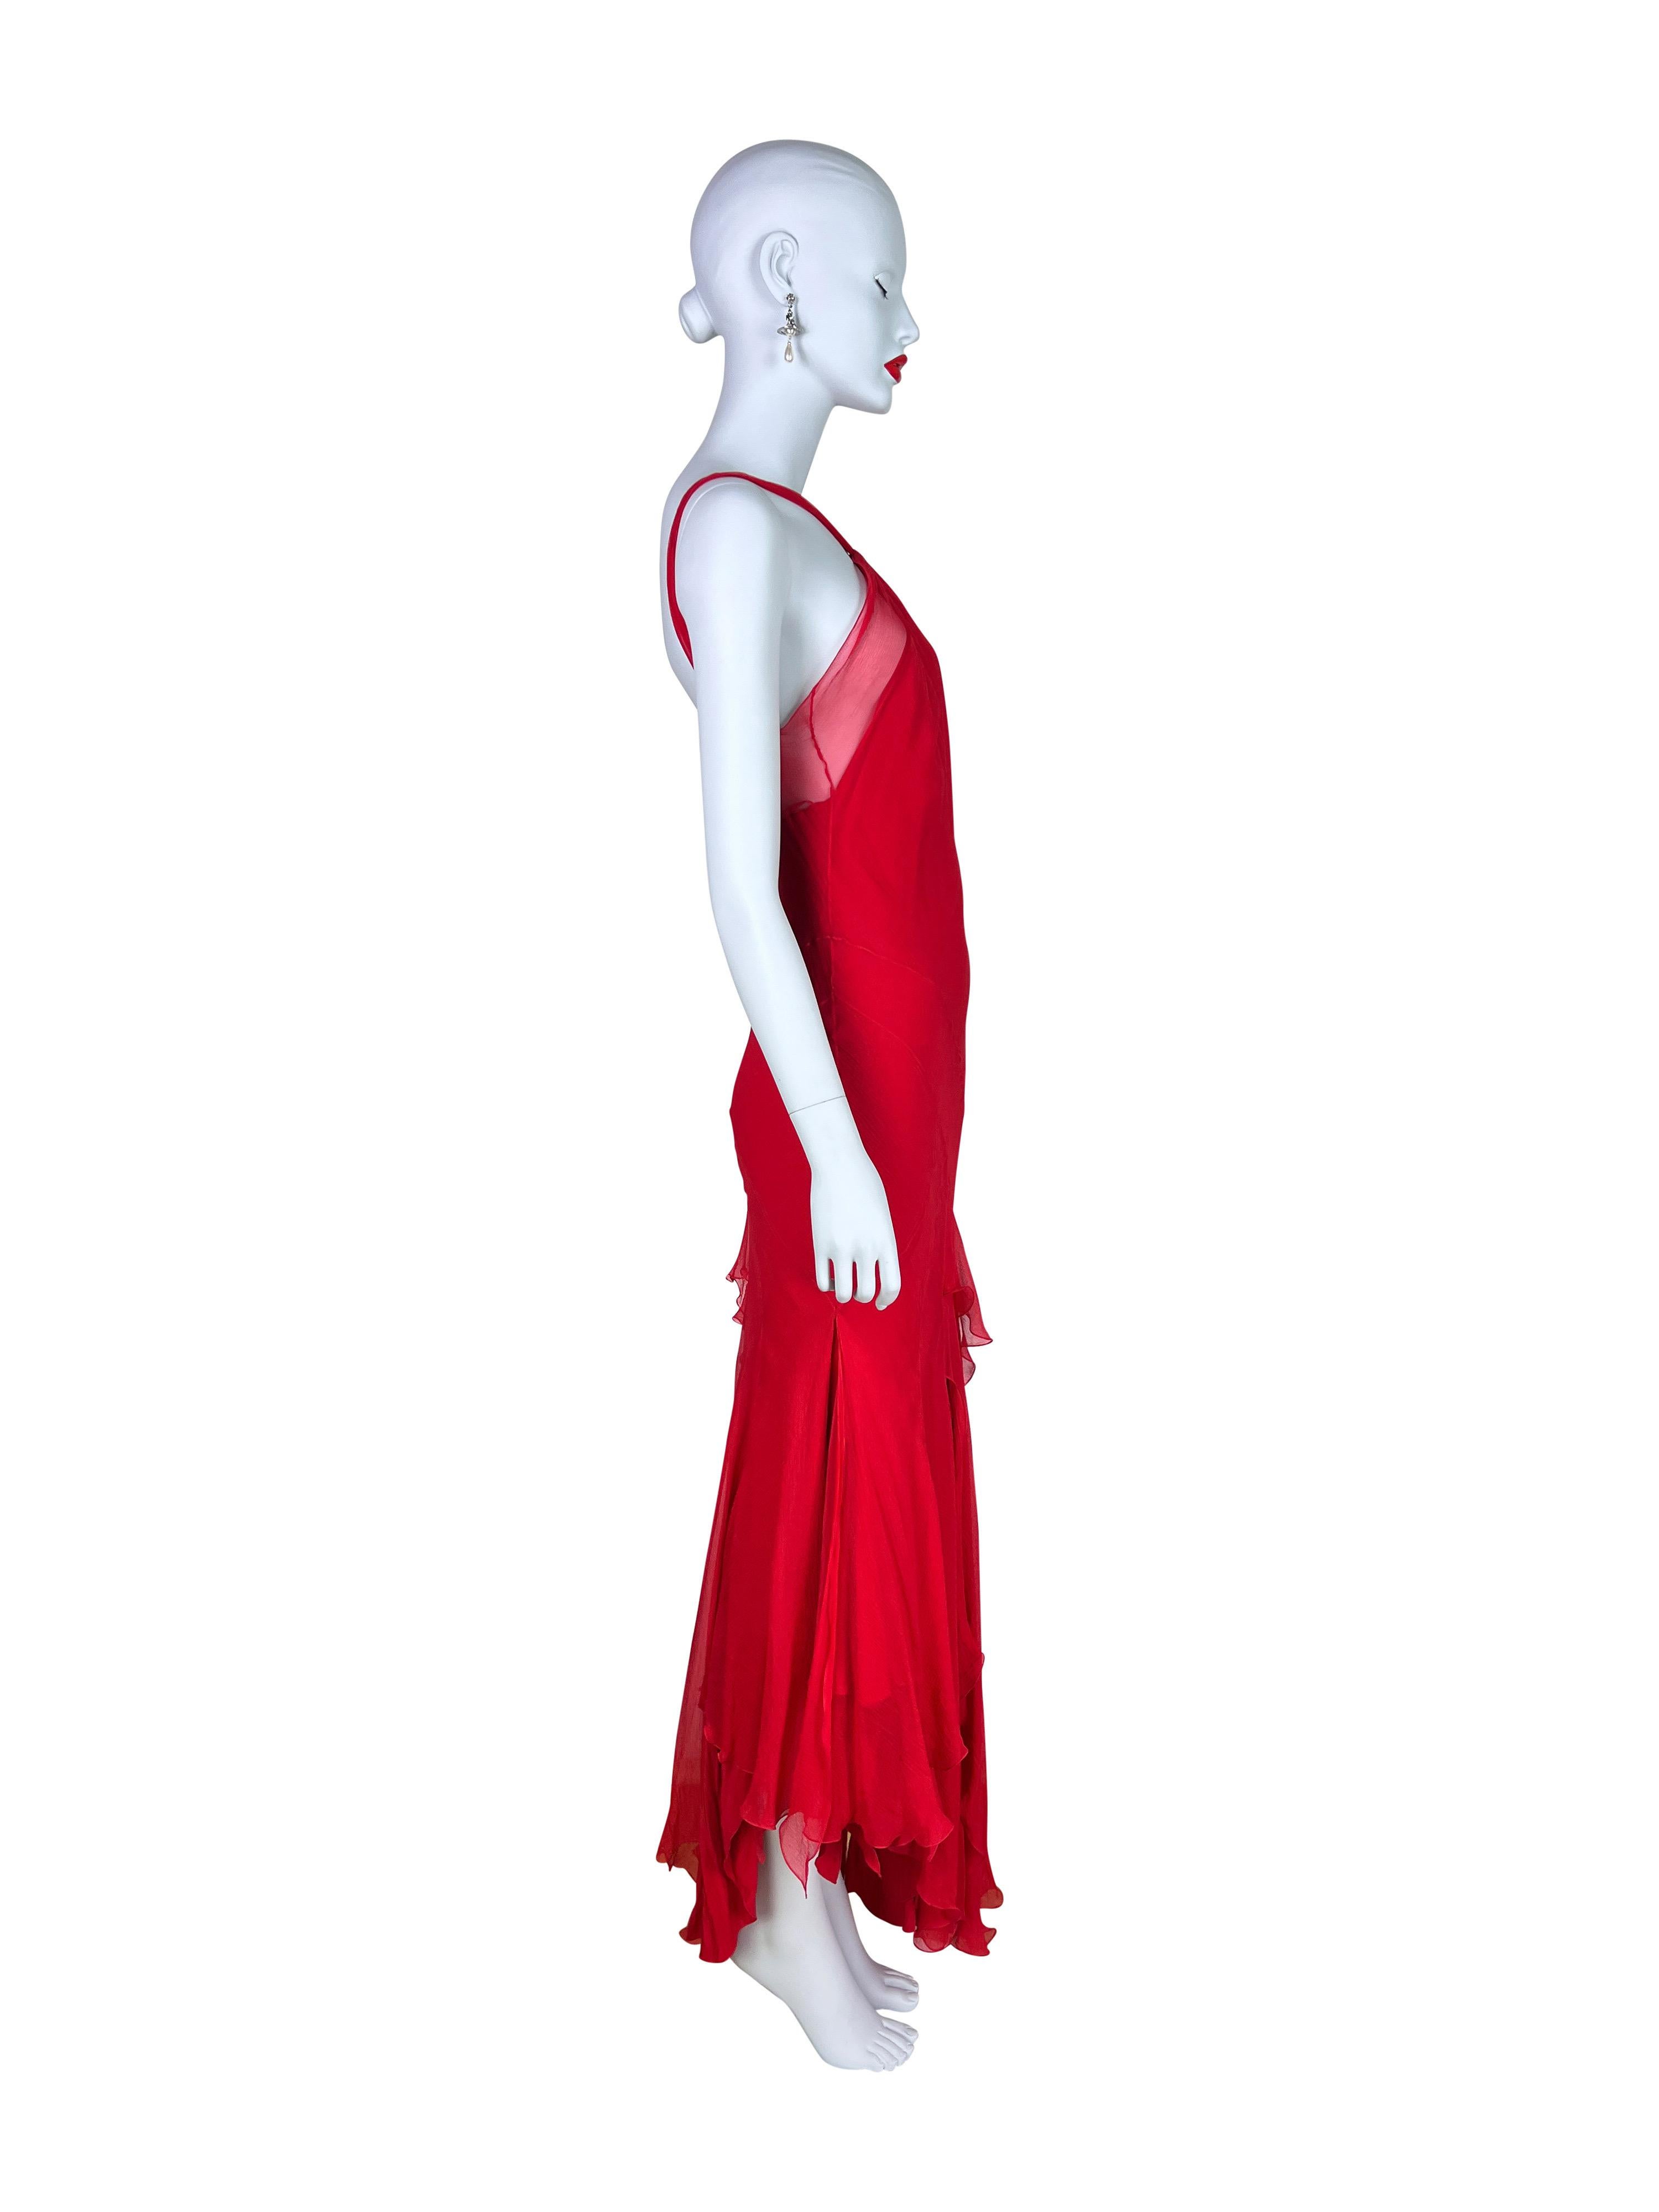 Dior by John Galliano Spring 2004 Red Bias Cut Silk Chiffon Dress 4